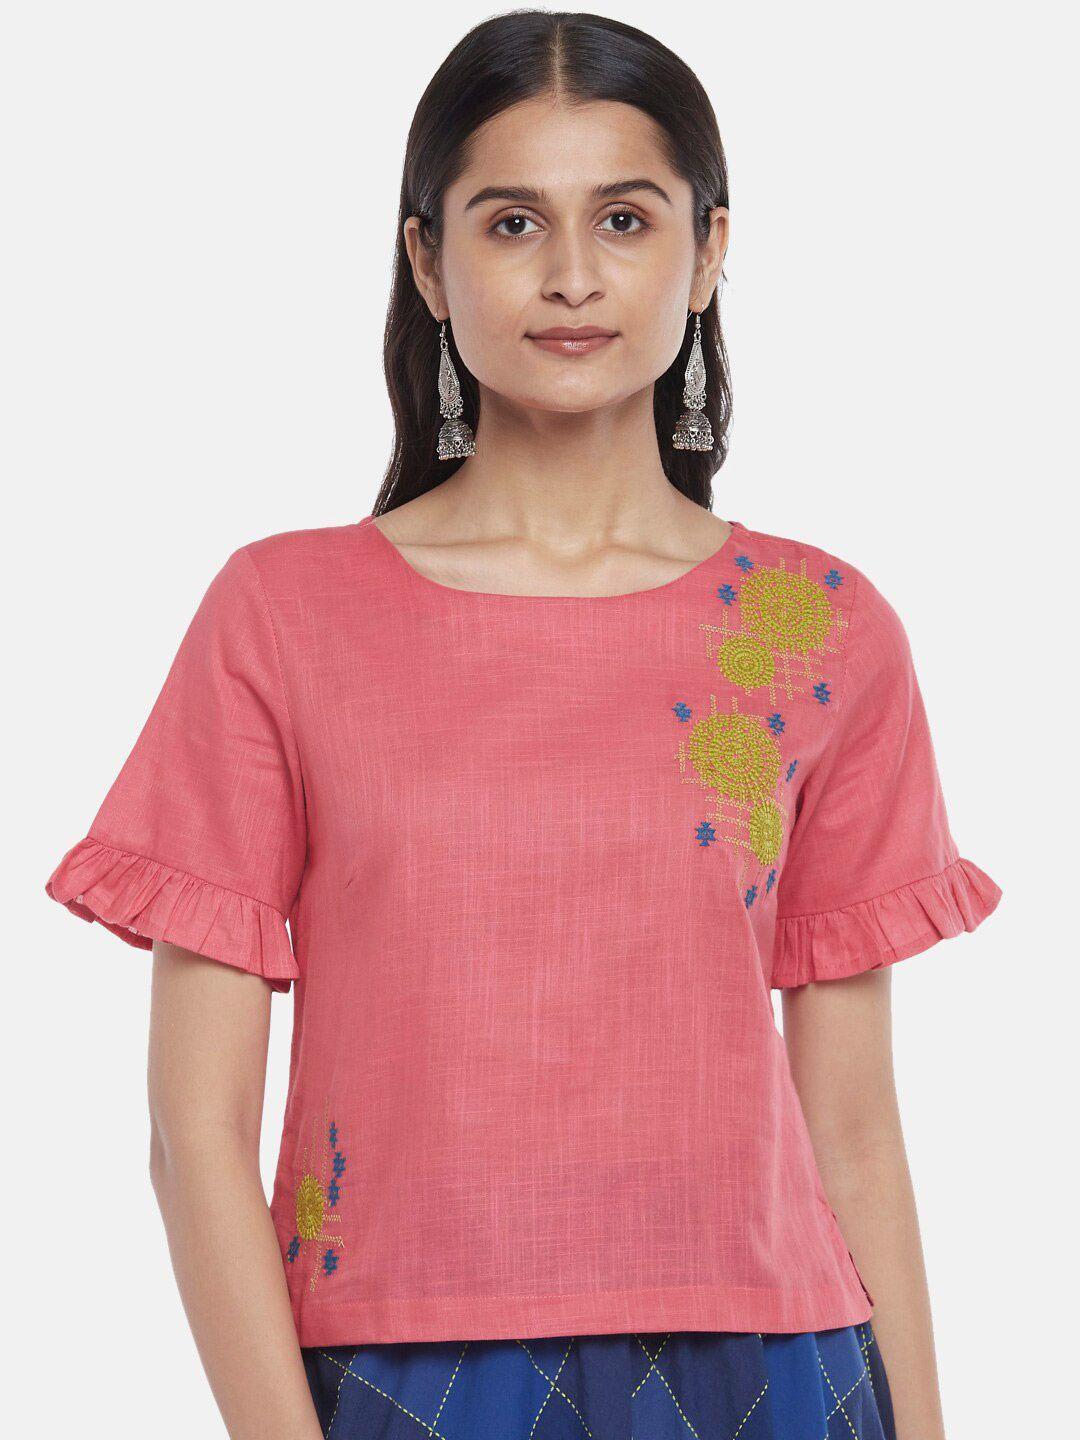 akkriti by pantaloons women pink & green geometric embroidered top